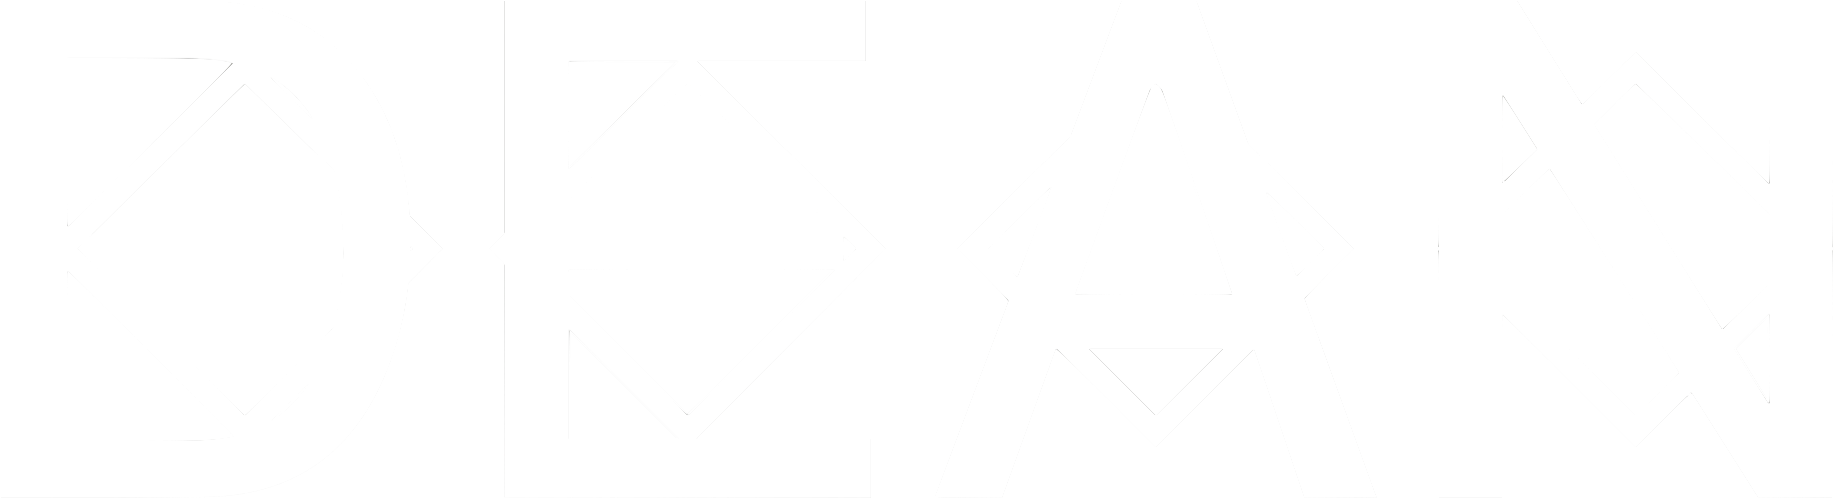 Songwriter - Design Department Logo (1920x1080), Png Download